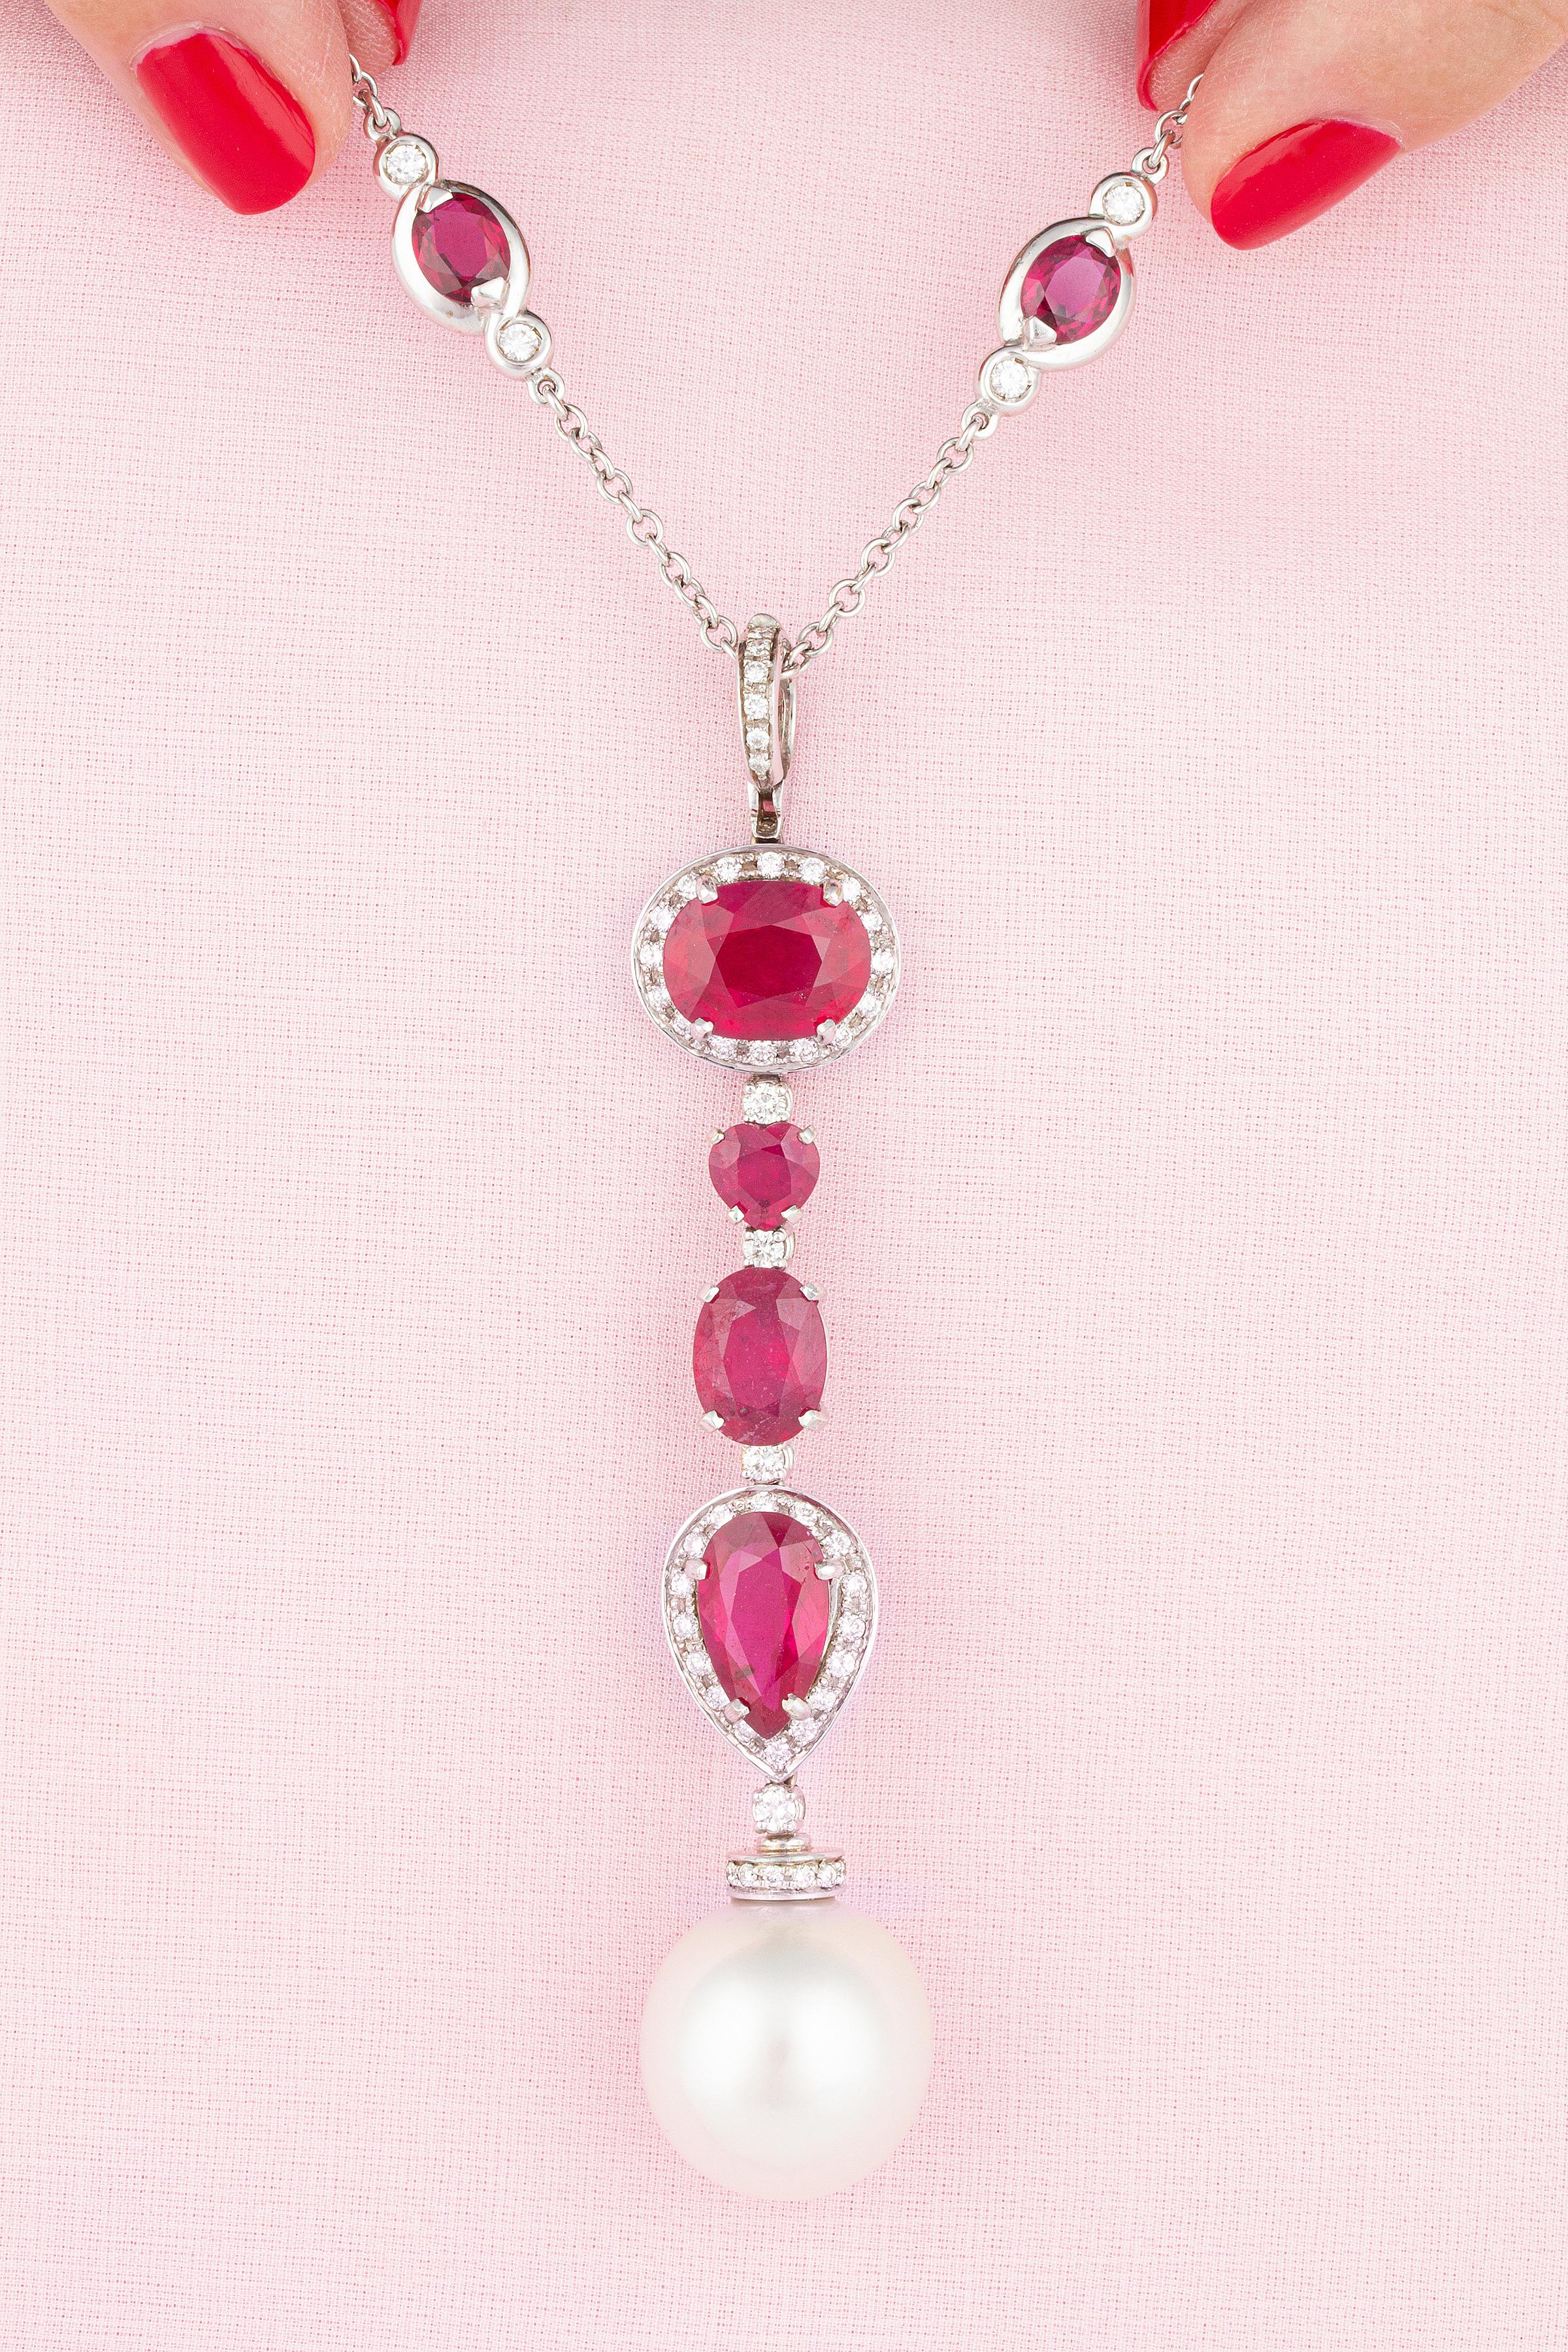 Brilliant Cut Ella Gafter Ruby Diamond Pearl Pendant Necklace For Sale